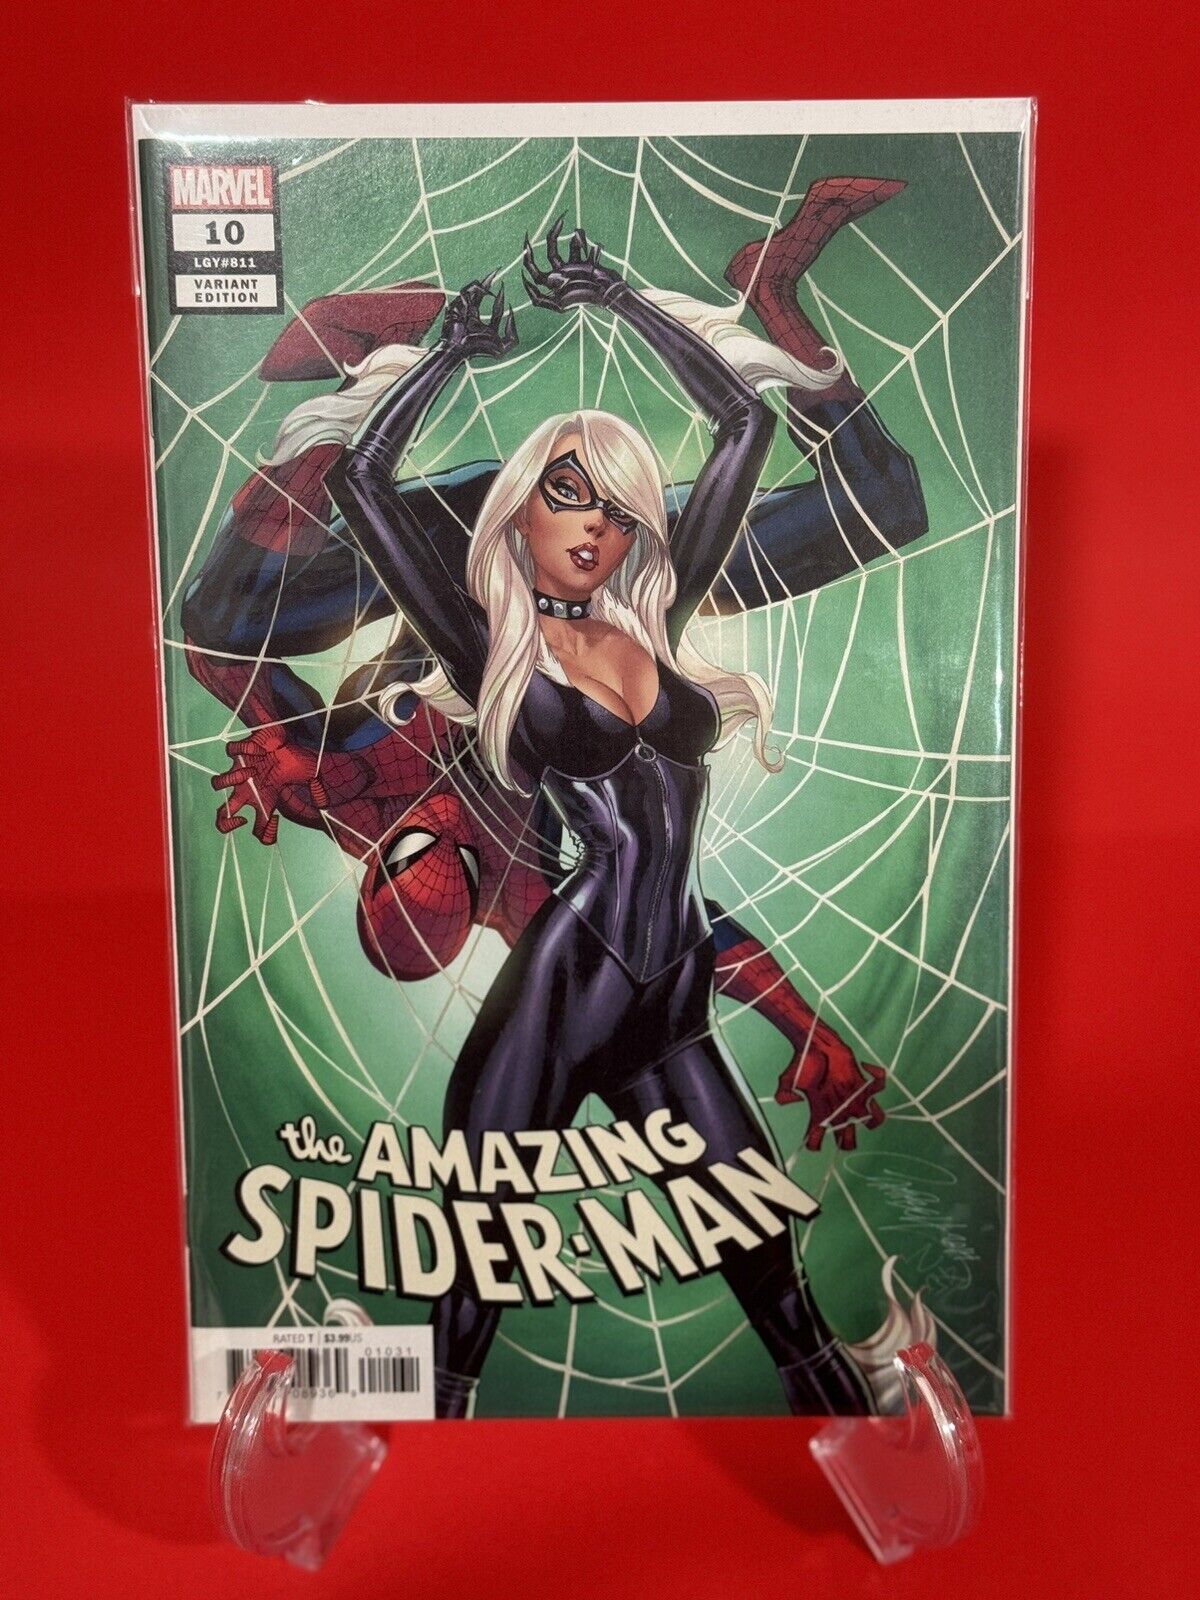 Amazing Spider-Man #10 (811) (Marvel Comics January 2019)